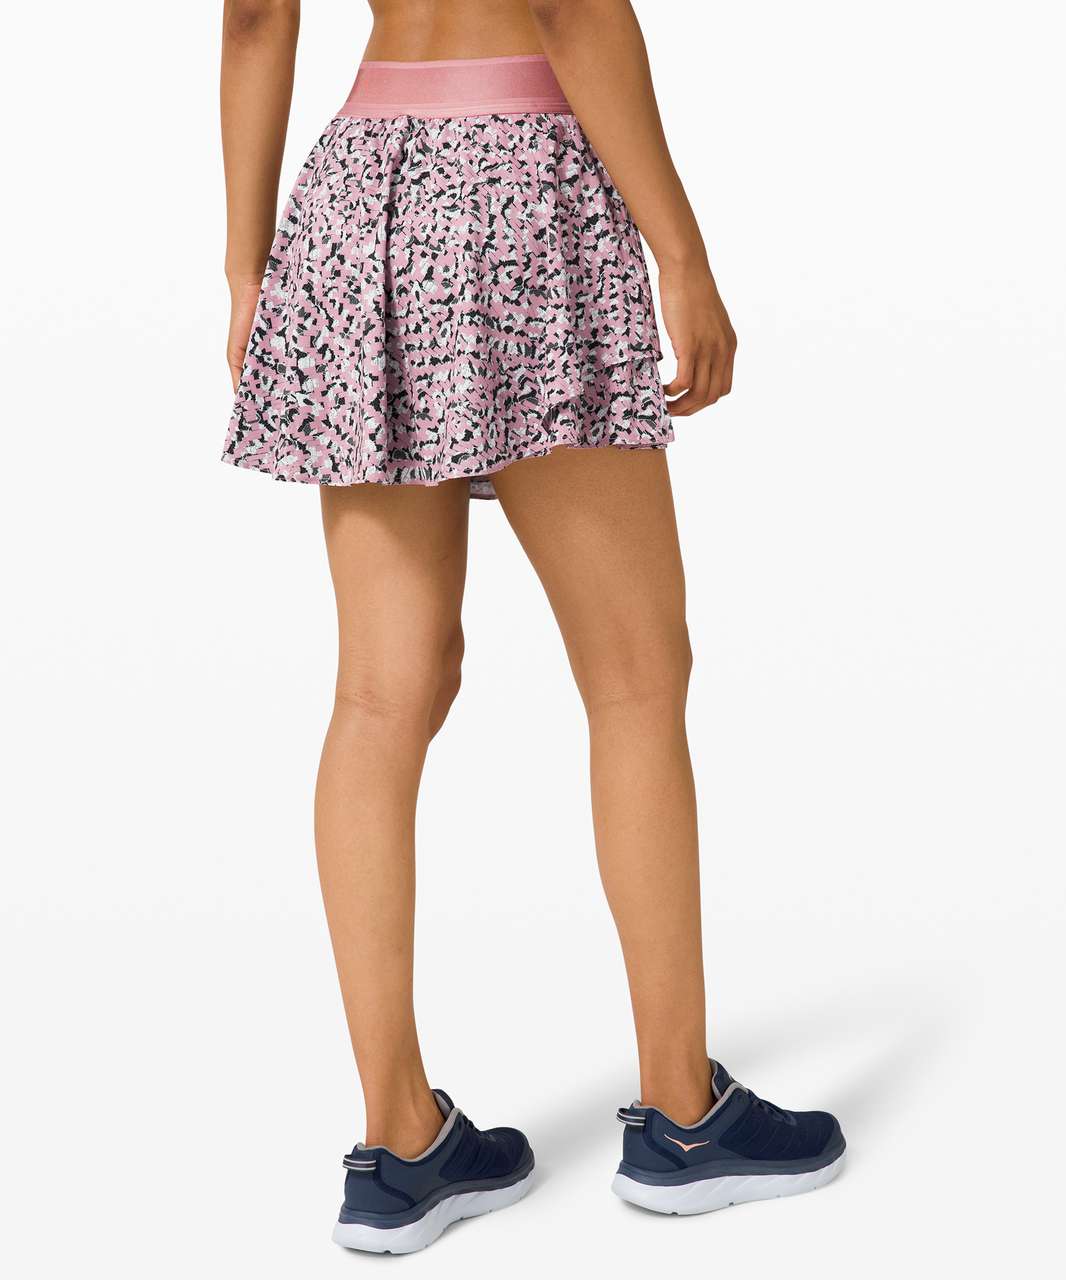 Lululemon Court Rival High Rise Skirt Tall - Pace Lace Rose Mauve Multi